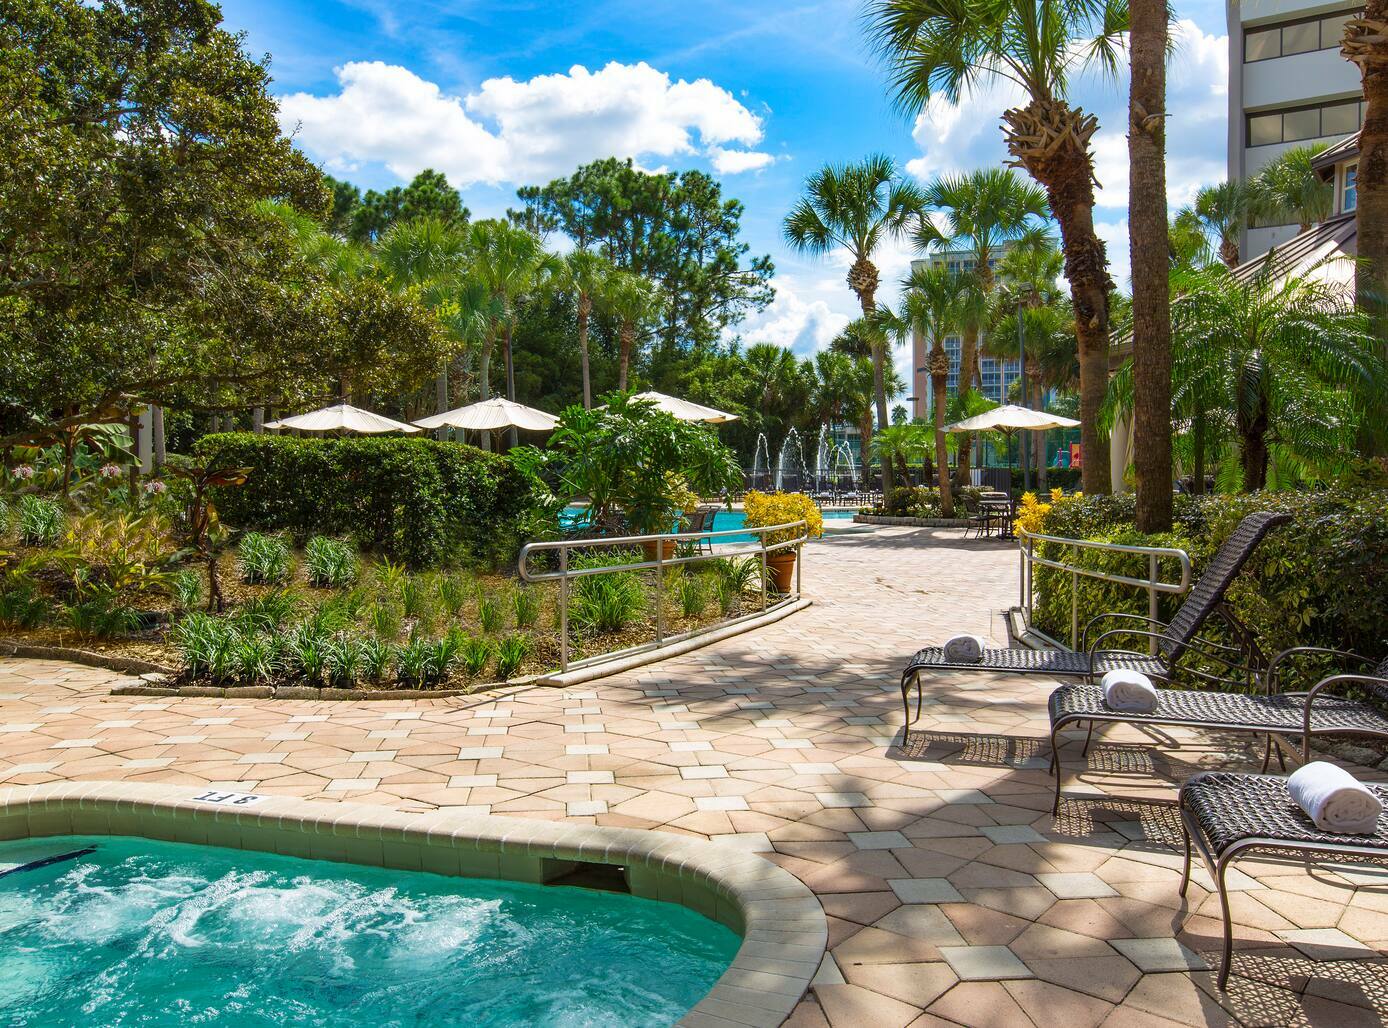 Photo of DoubleTree Suites by Hilton Orlando - Disney Springs™ Area, Lake Buena Vista, FL